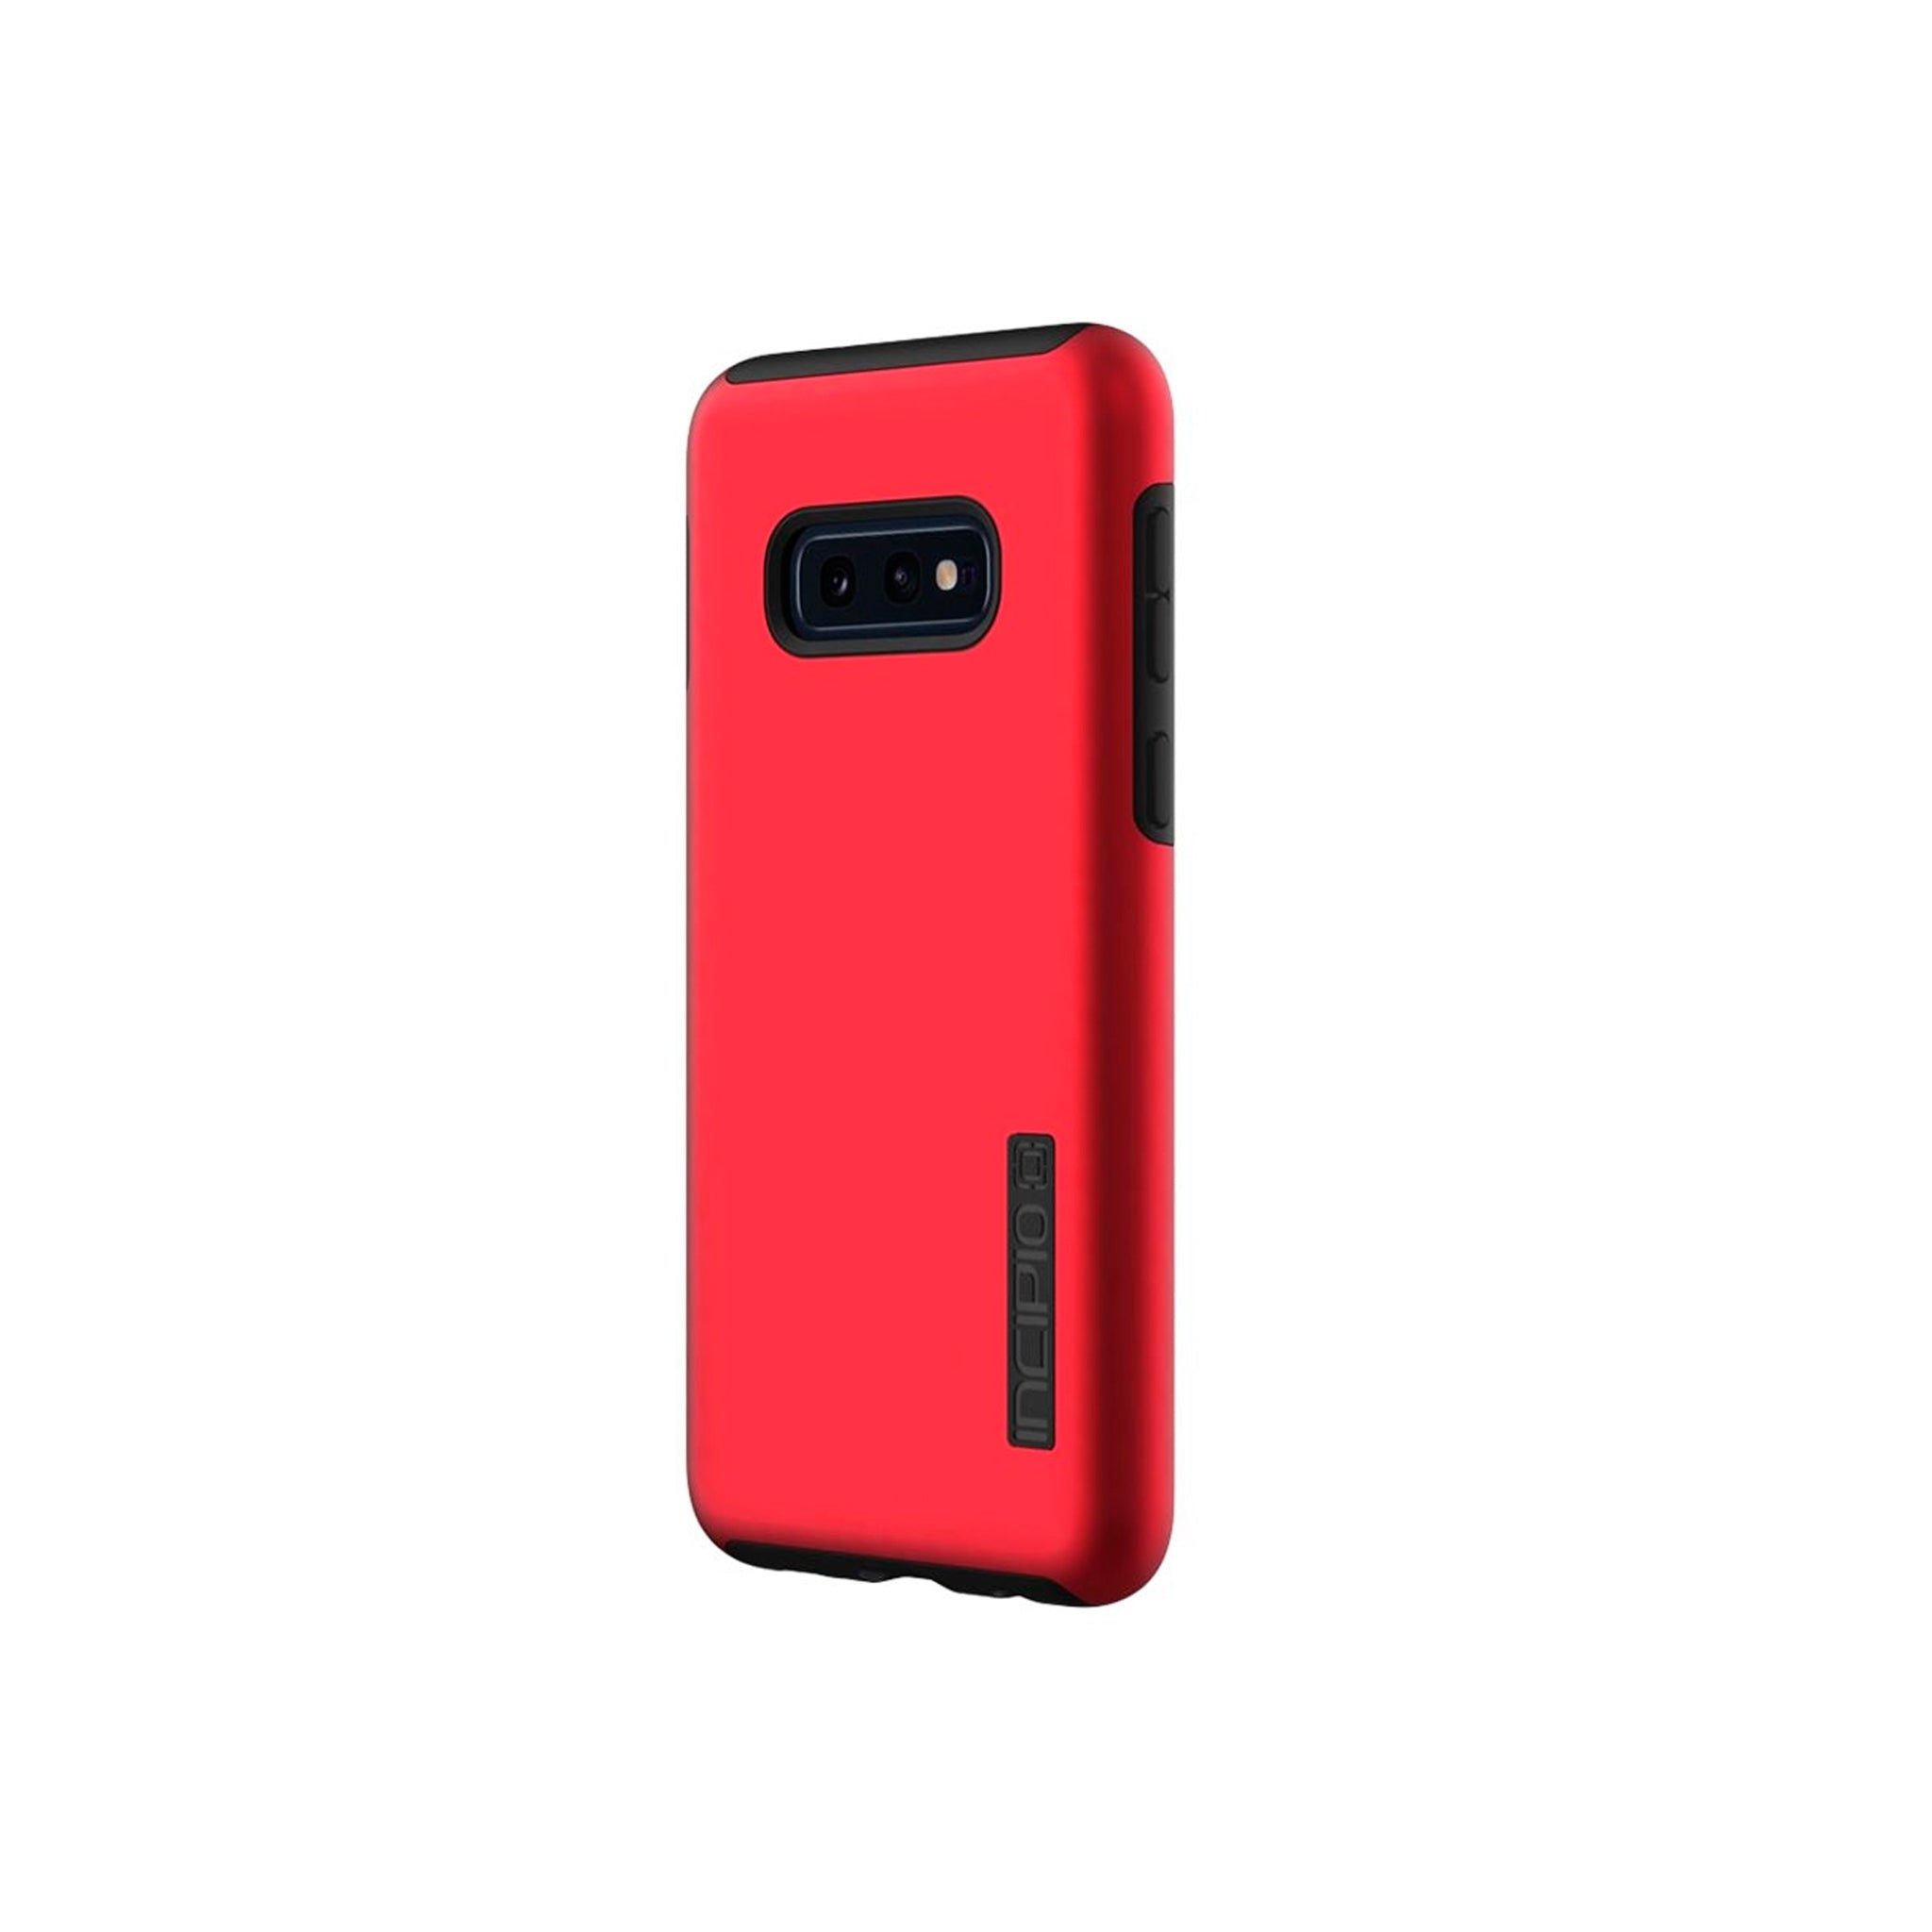 Incipio - DualPro Case For Samsung Galaxy S10e - Iridescent Red And Black